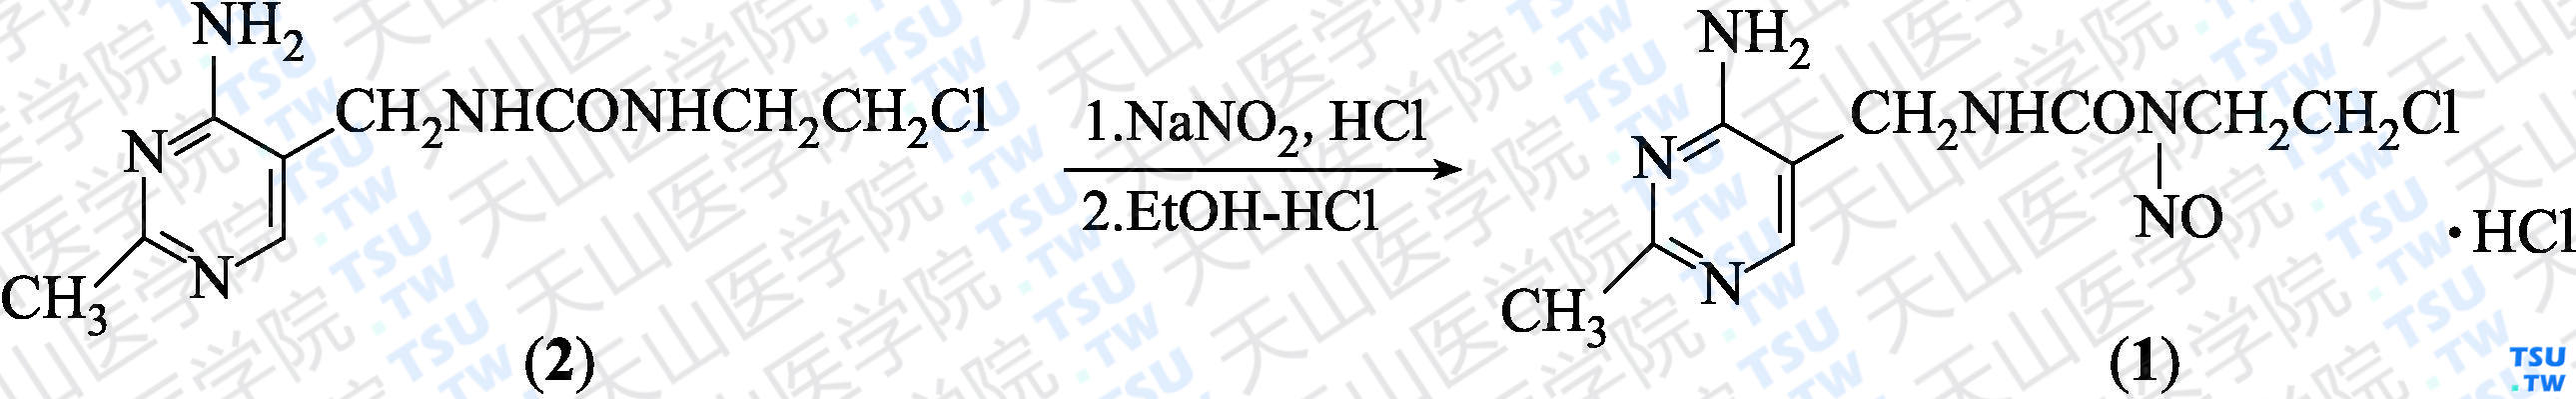 盐酸尼莫司汀（分子式：C<sub>9</sub>H<sub>13</sub>ClN<sub>6</sub>O<sub>2</sub>·HCl）的合成方法路线及其结构式